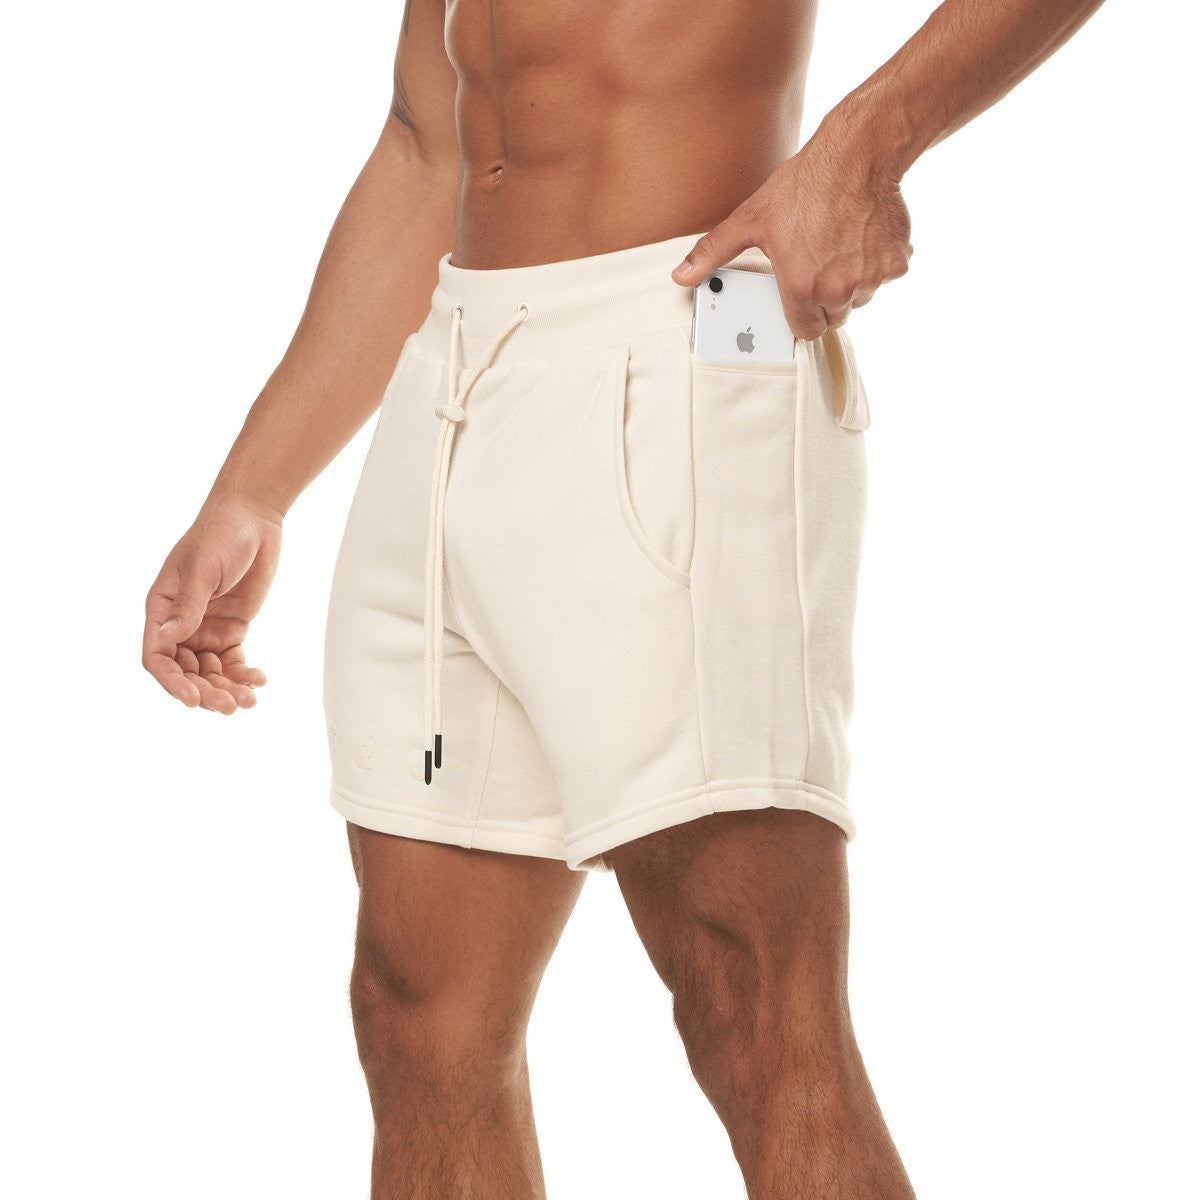 Cotton Gym Shorts